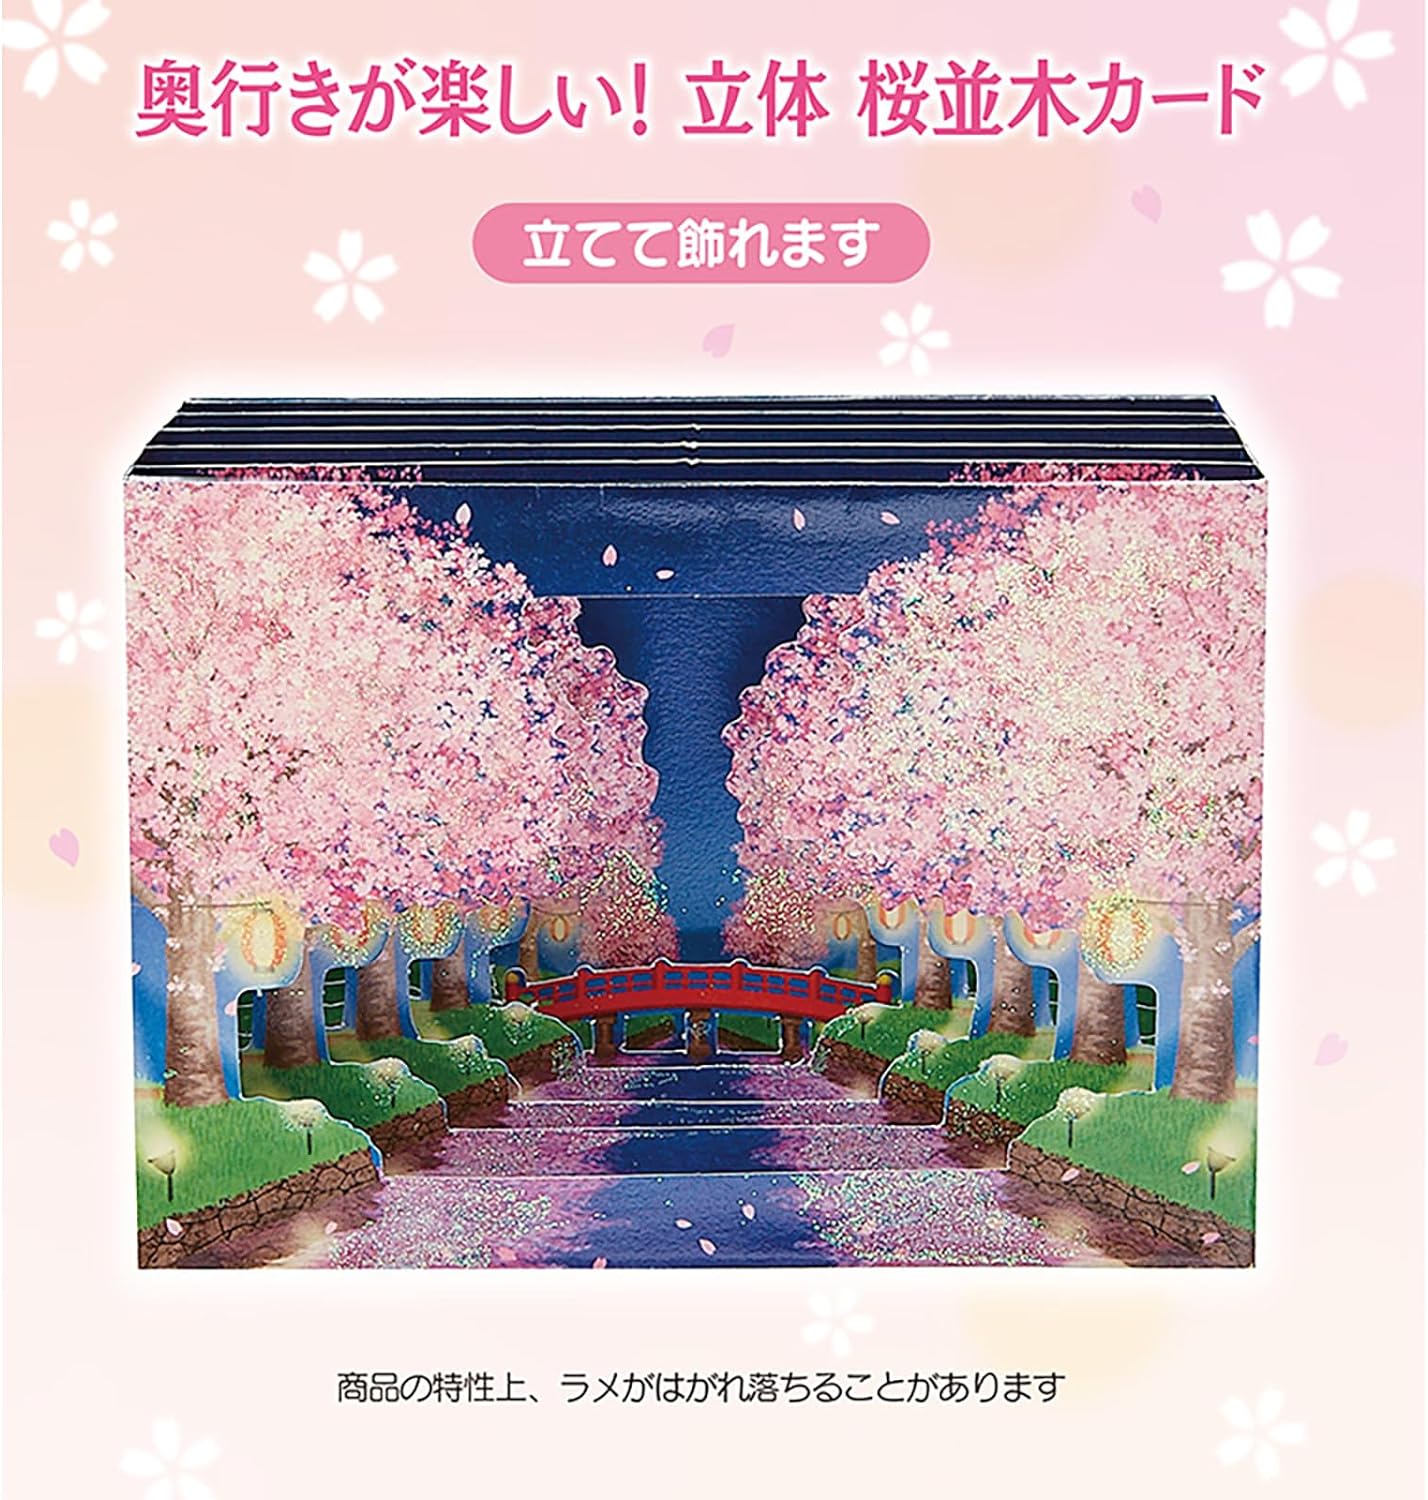 Sanrio Greeting Card: Sakura Night Bridge